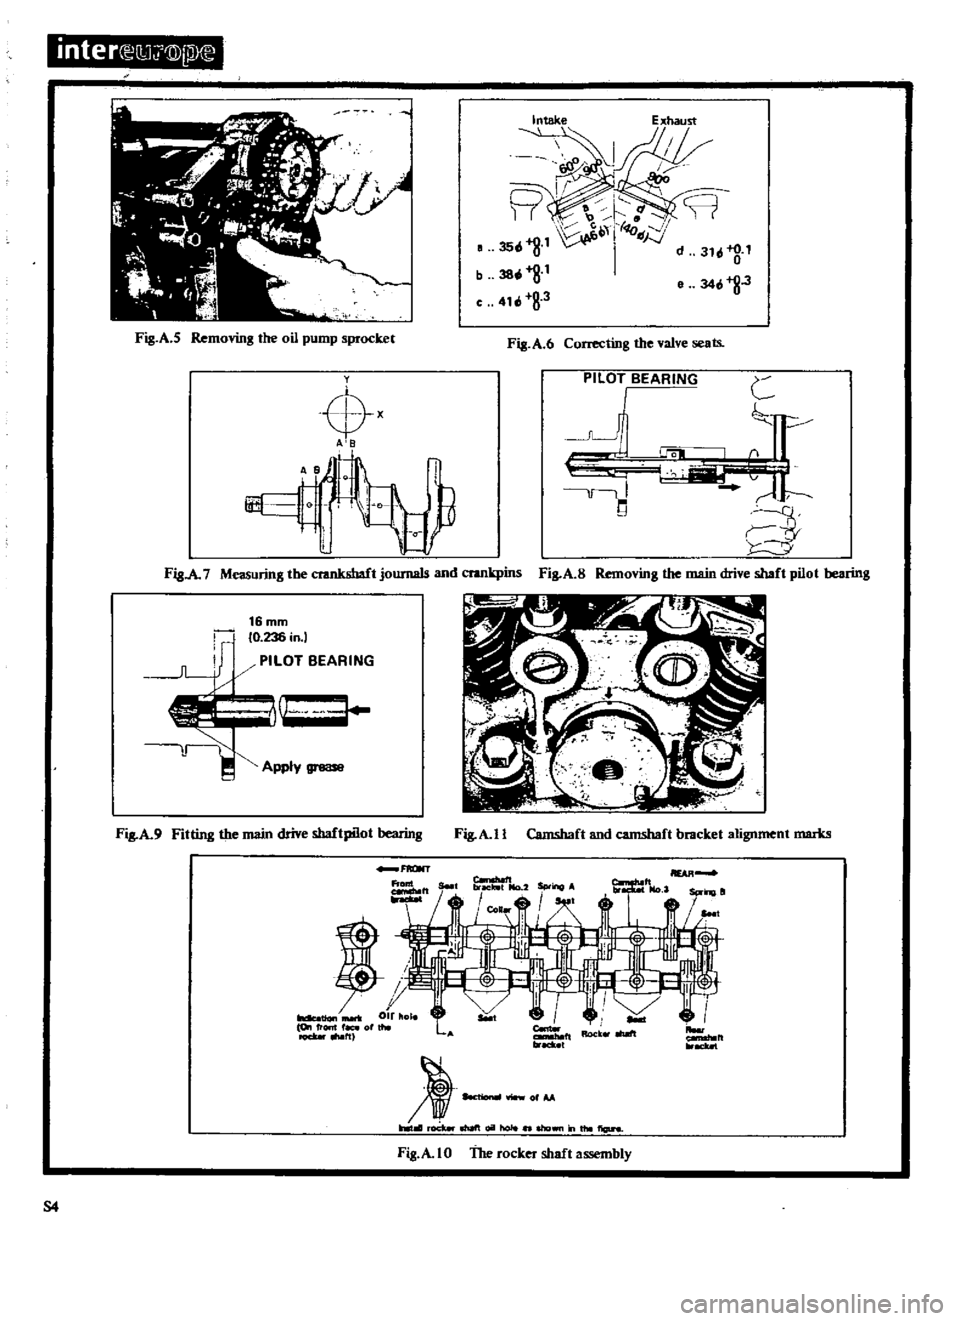 DATSUN 510 1969  Service Repair Manual 
inter 
l
iIJ

1lJLW

Fig 
A
5

Removing 
the 
oil

pump 
sprocket

y

x

A 
S

AB10

a
1 
yZ 
rt

f

1 
D

v 
J 
r
totl

35 
0 
1

v 
J

v

0 
d

3101 
1

b 
380

g 
1

e

410

8 
3 
a

340
g 
3

Fig